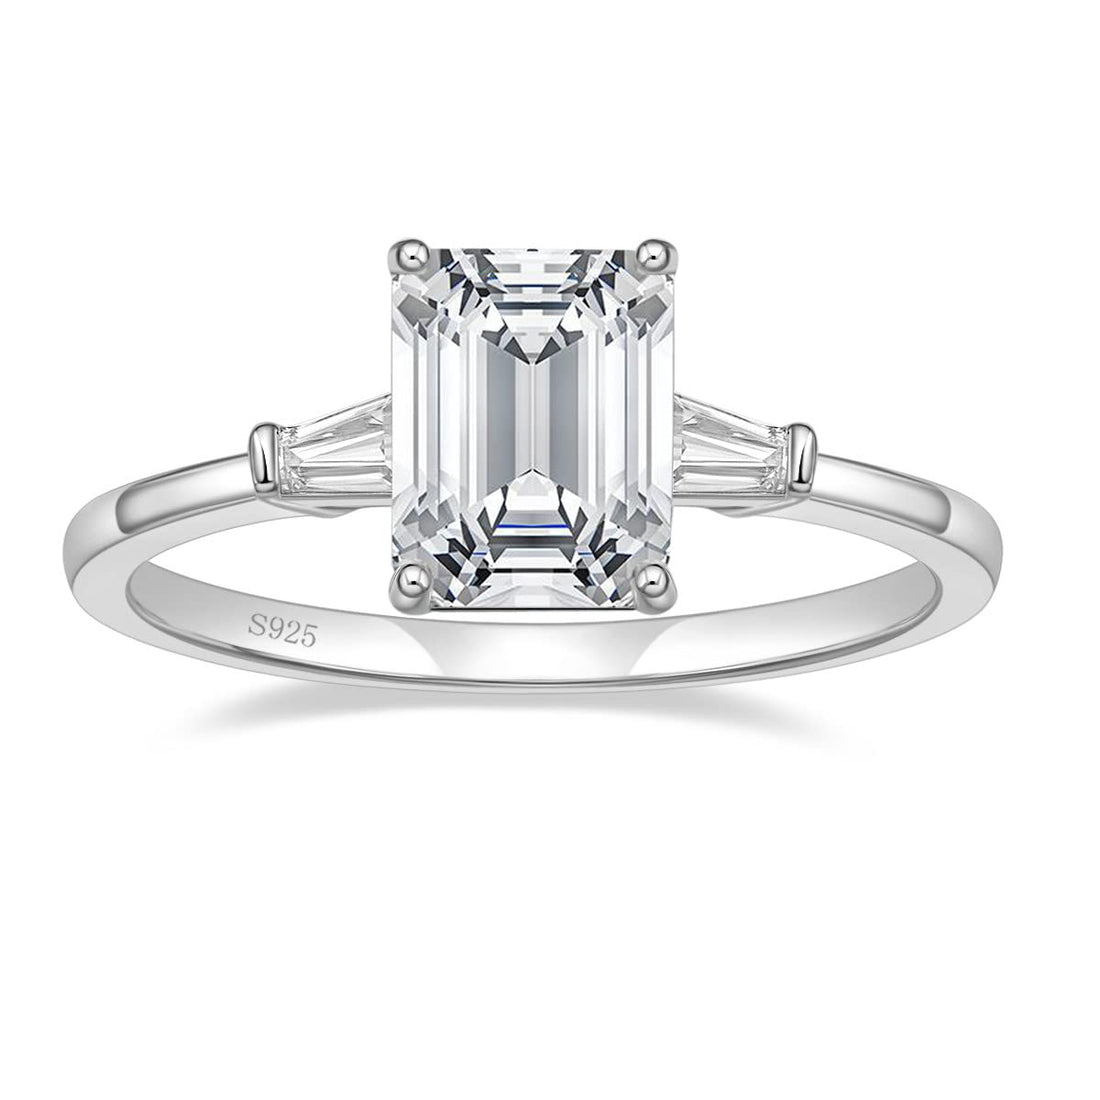 gemstone engagement rings; cheap quality rings; Eamti;